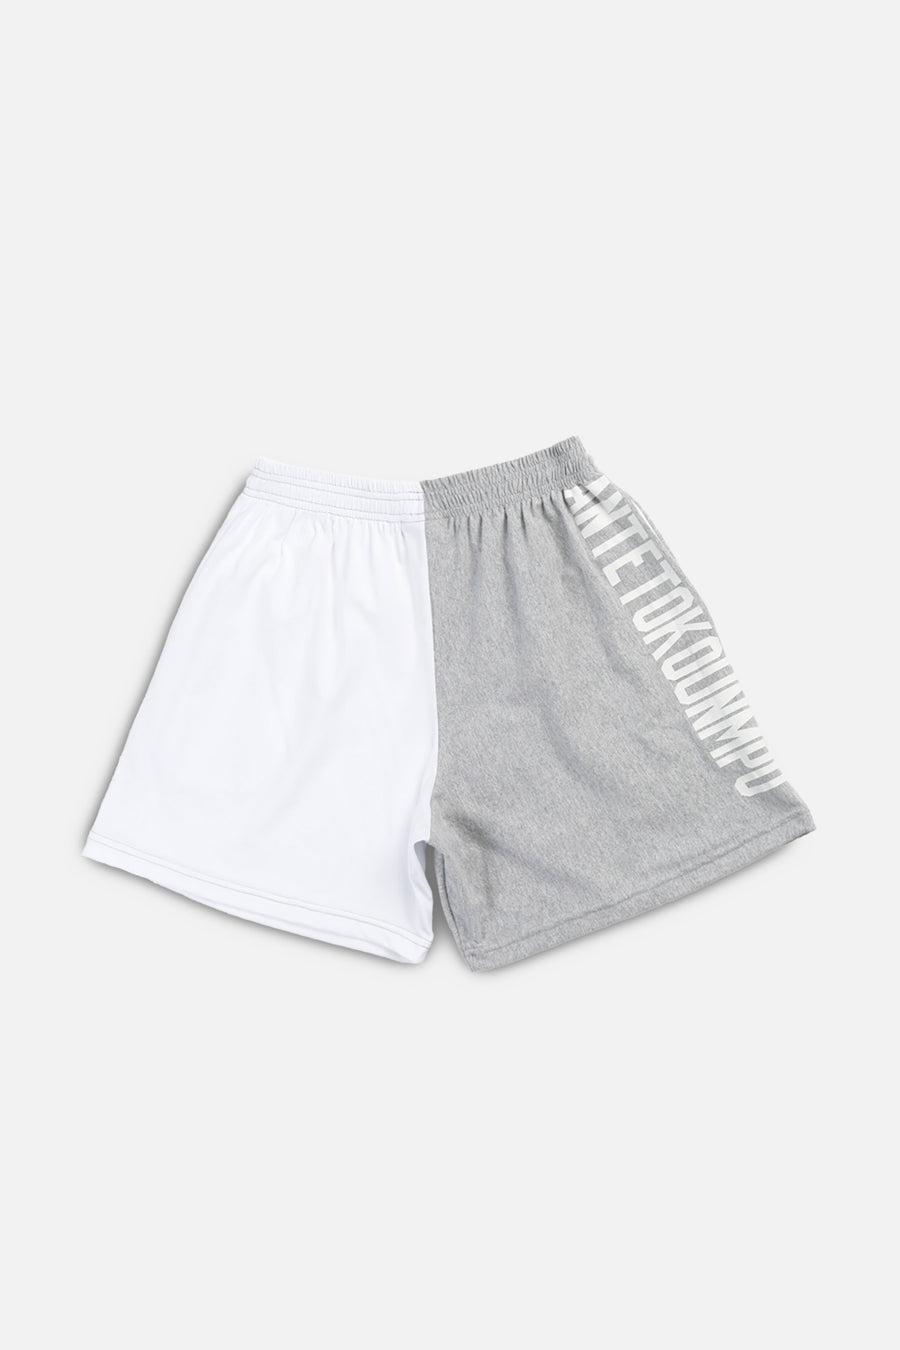 Unisex Rework All-Star NBA Patchwork Tee Shorts - S